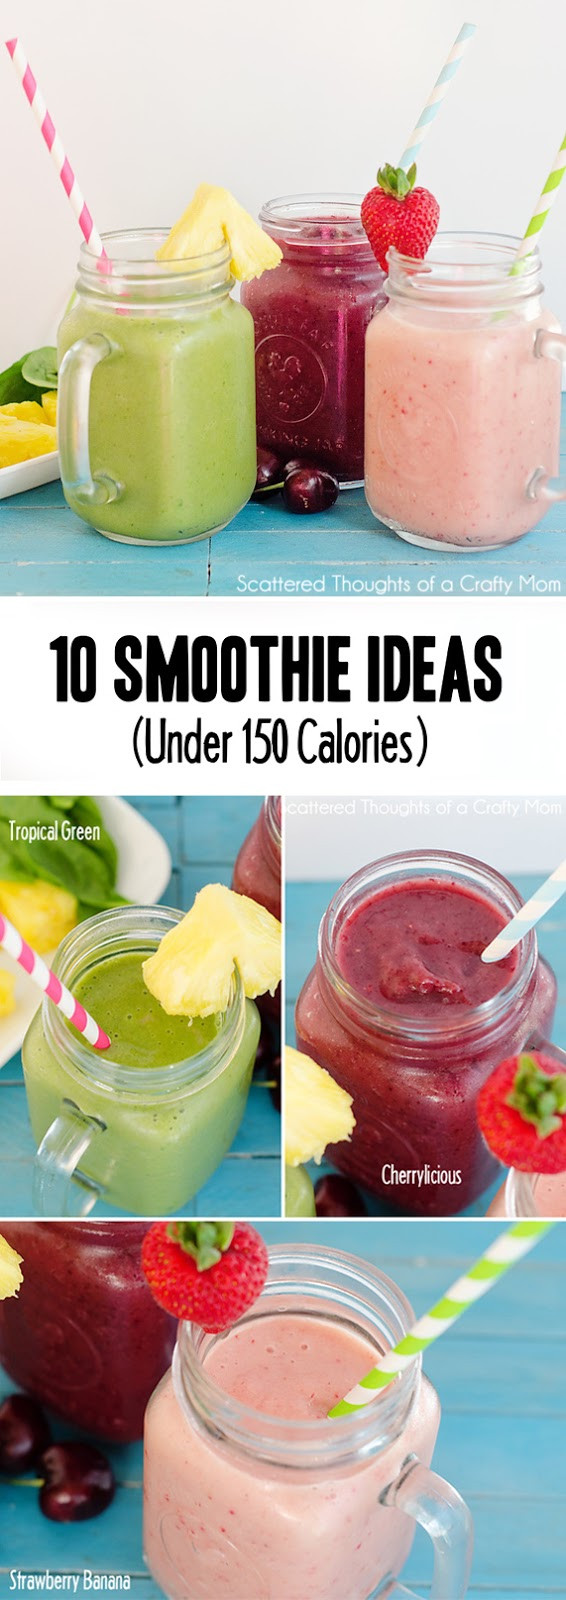 Low Calorie Smoothie Recipes
 10 Smoothie Ideas under 150 calories